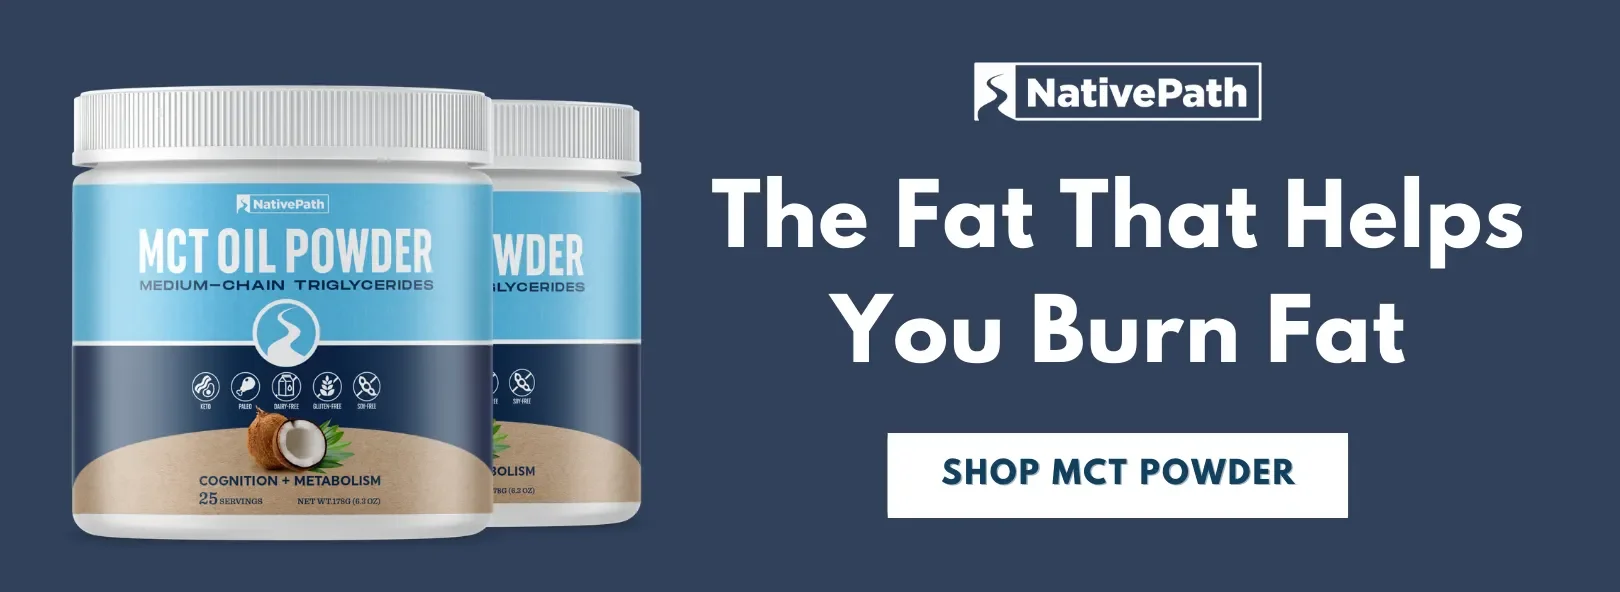 The Fat That Helps You Burn Fat: Shop NativePath MCT Powder